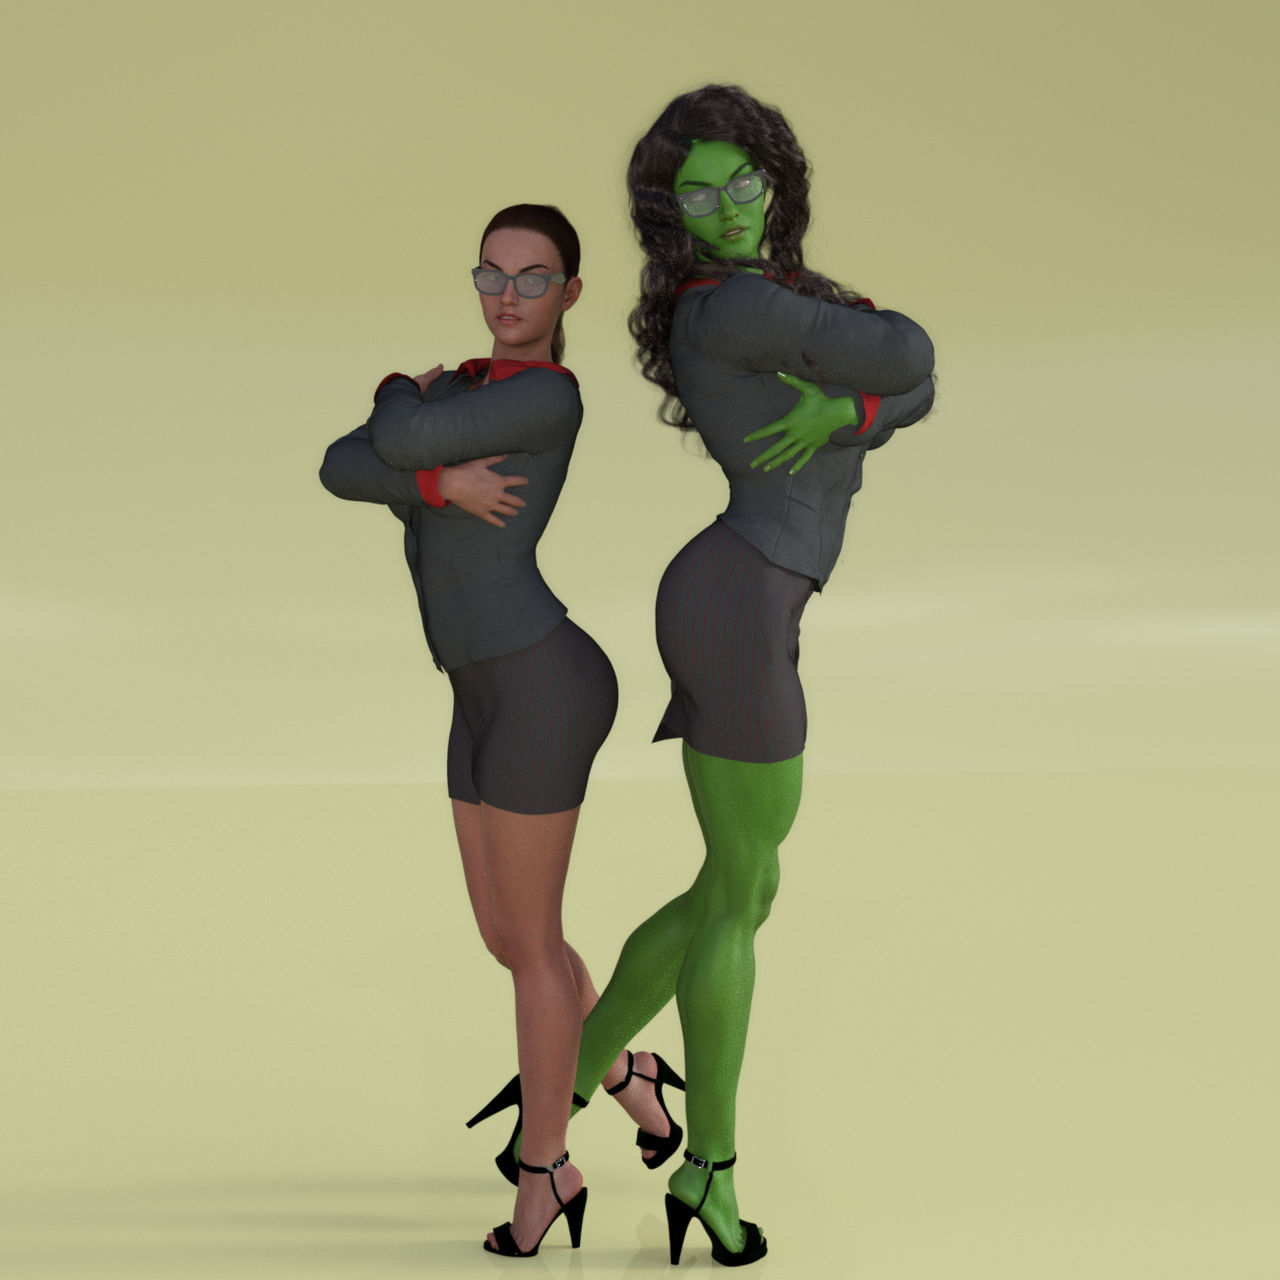 Jennifer And She Hulk Back To Back By Wool74 On Deviantart